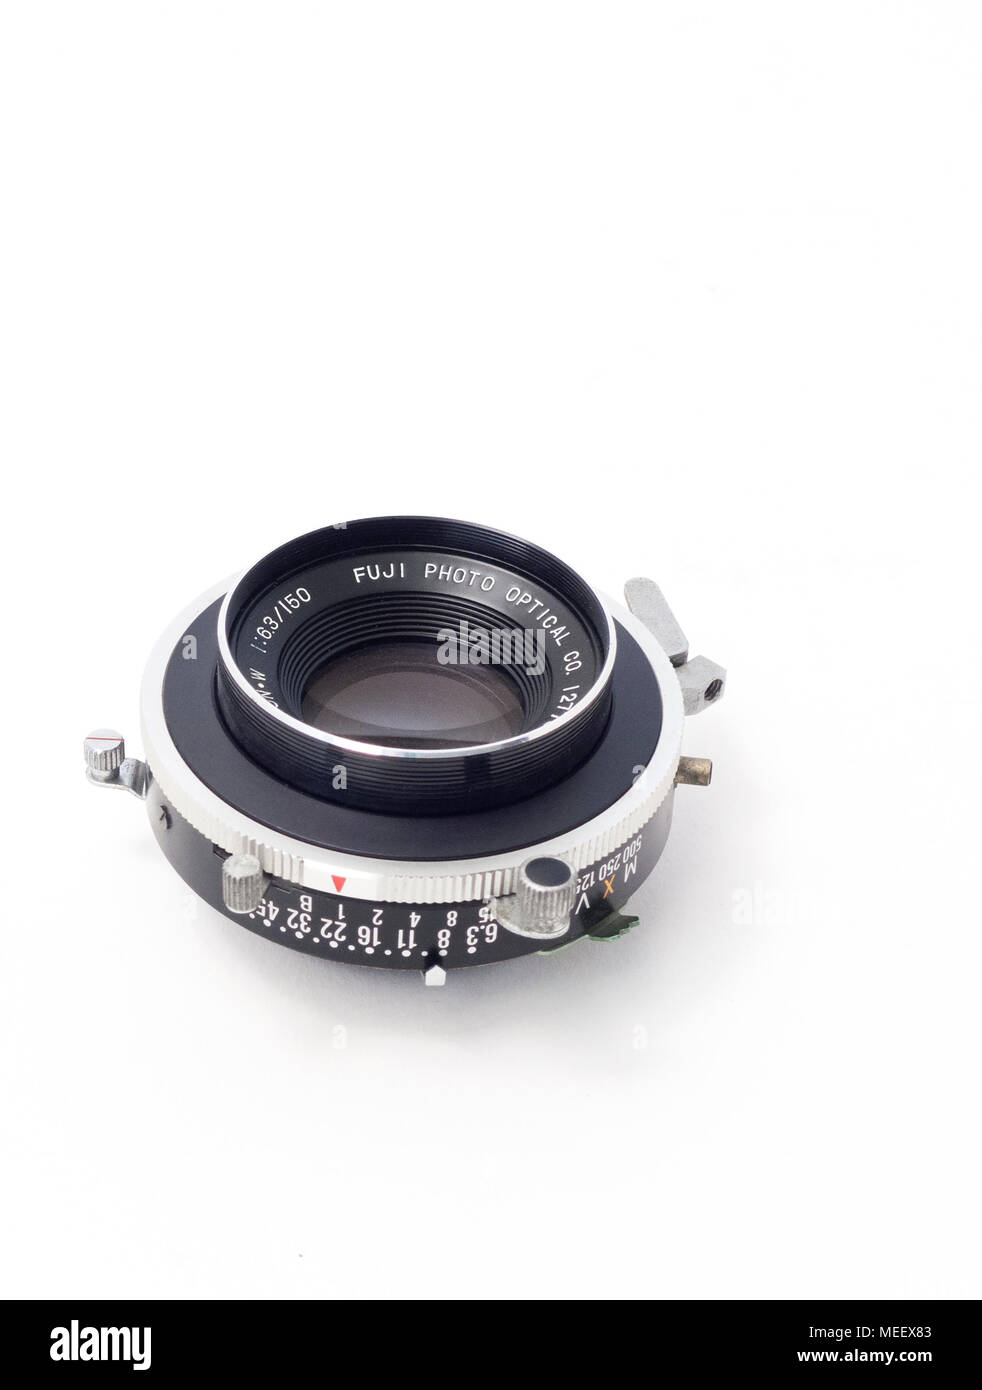 Fujinon-W 150mm f/6.3 large format photographic lens in a Seiko Shutter.  "FUJINON-W 1:6.3/150 FUJI PHOTO OPTICAL CO.127702 LENS-JAPAN Stock Photo -  Alamy